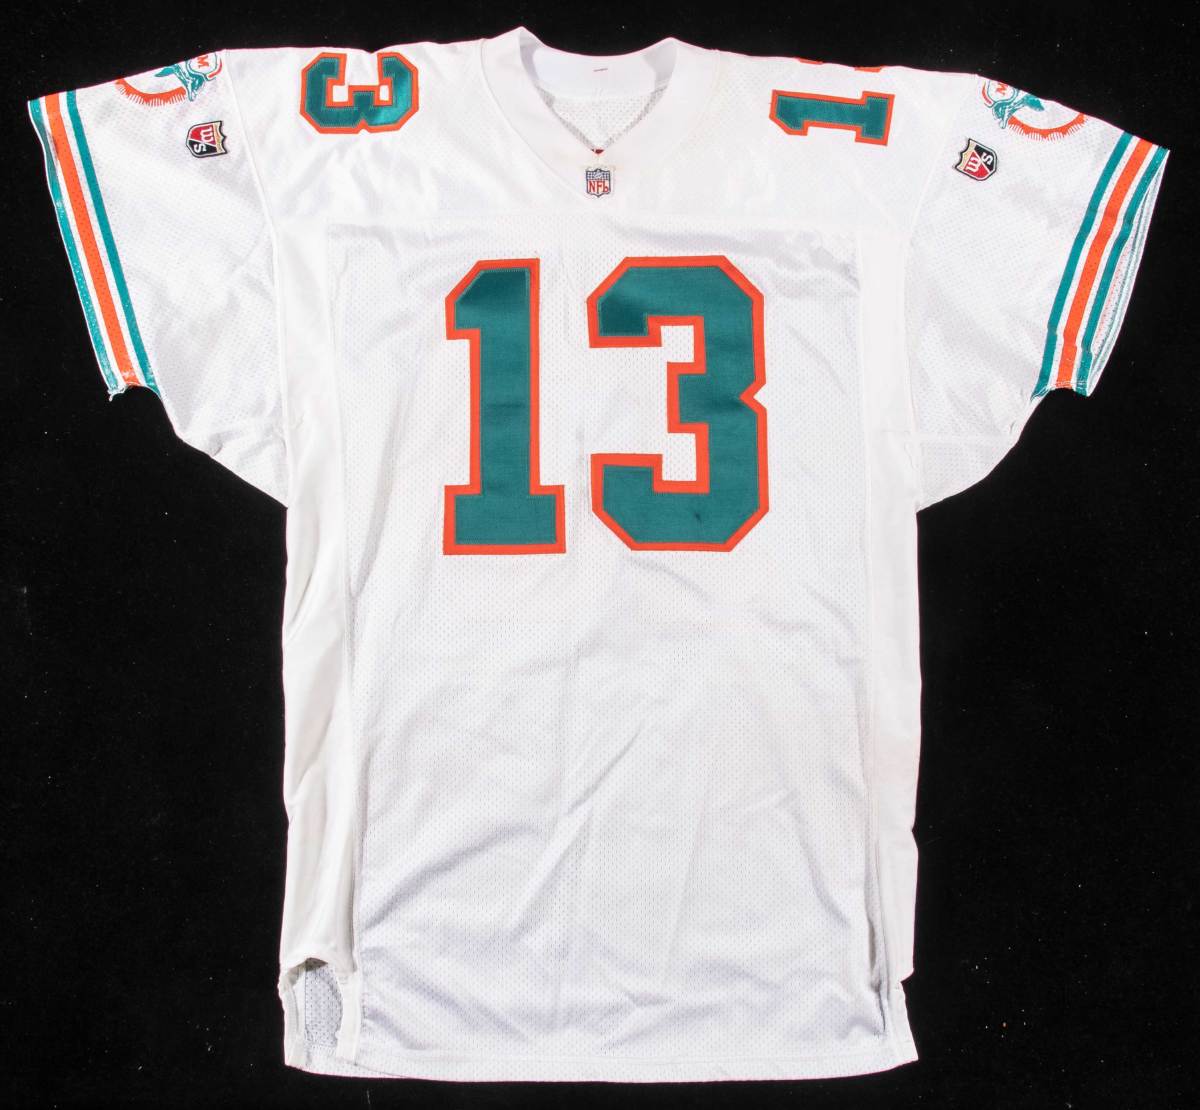 1995 Dan Marino Miami Dolphins professional model jersey.